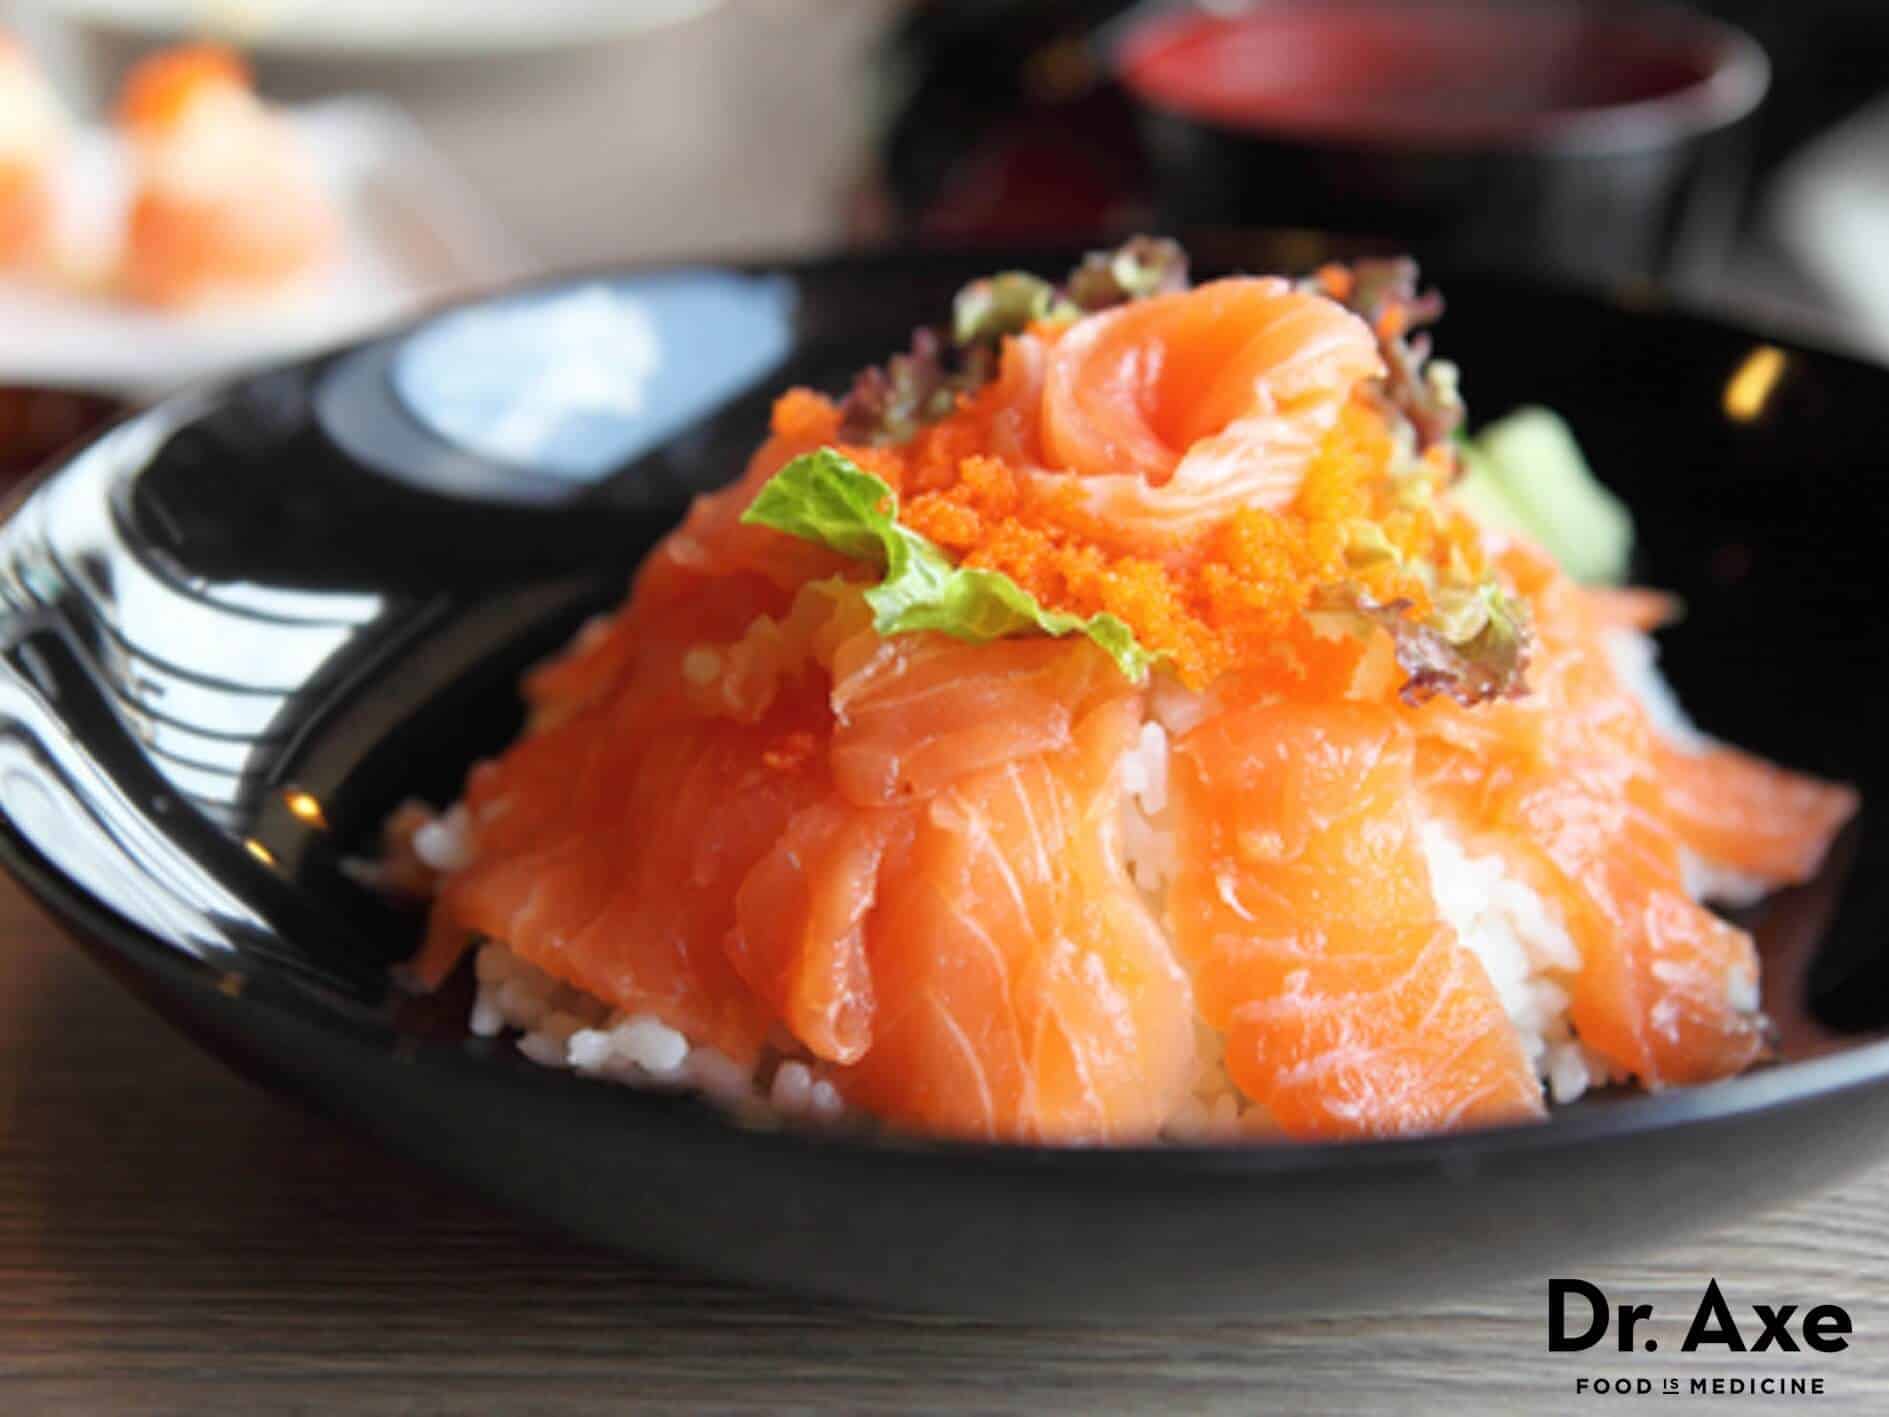 Smoked salmon sushi bowl recipe - Dr. Axe